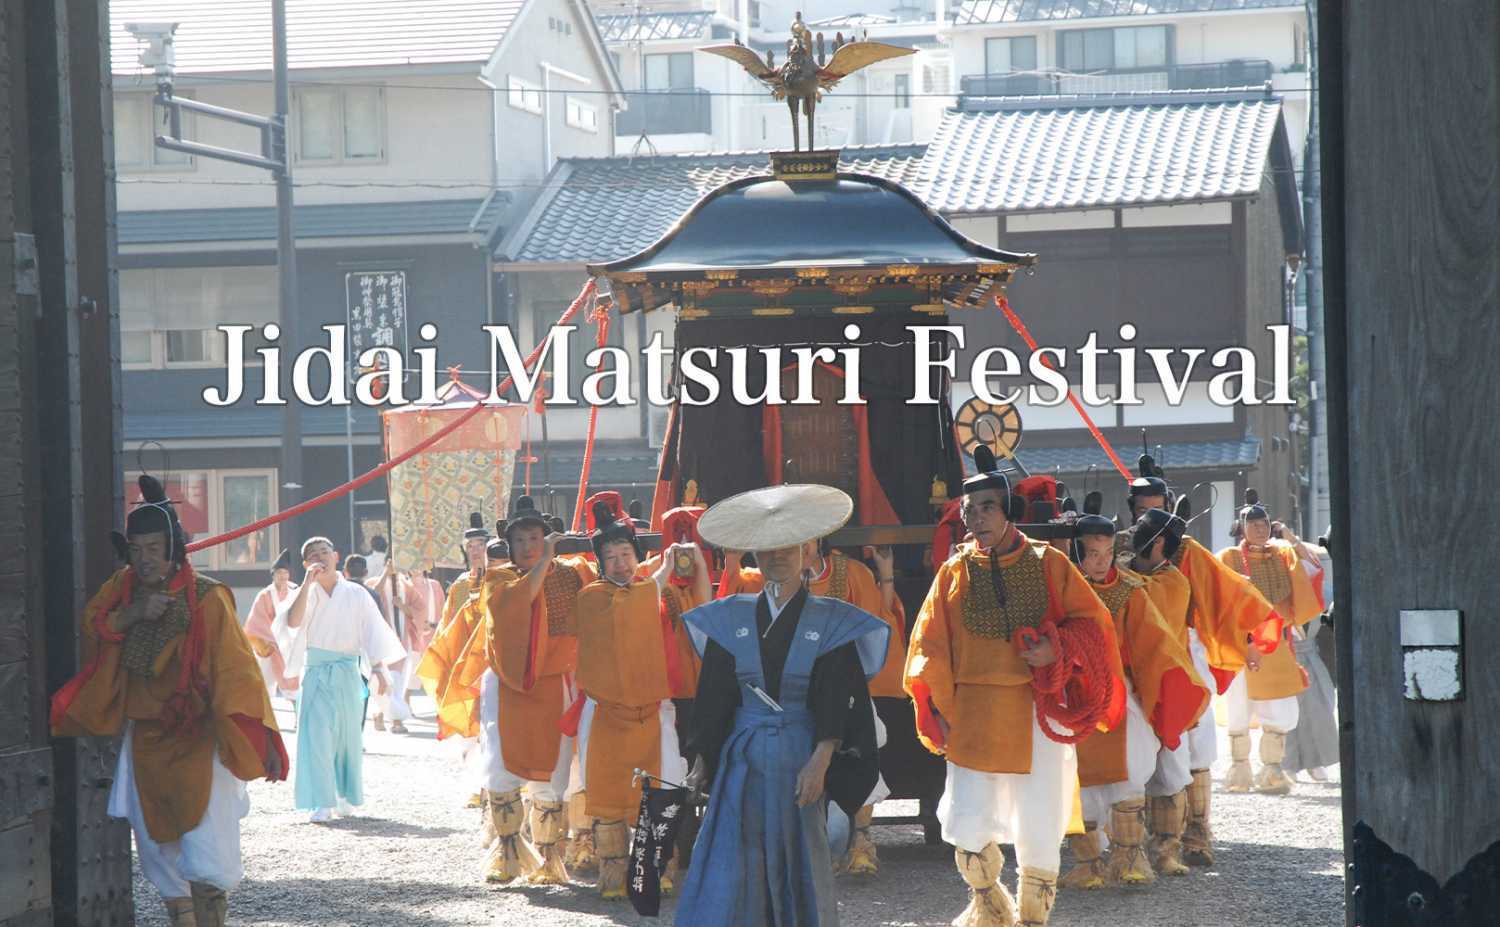 The Jidai Matsuri Festival